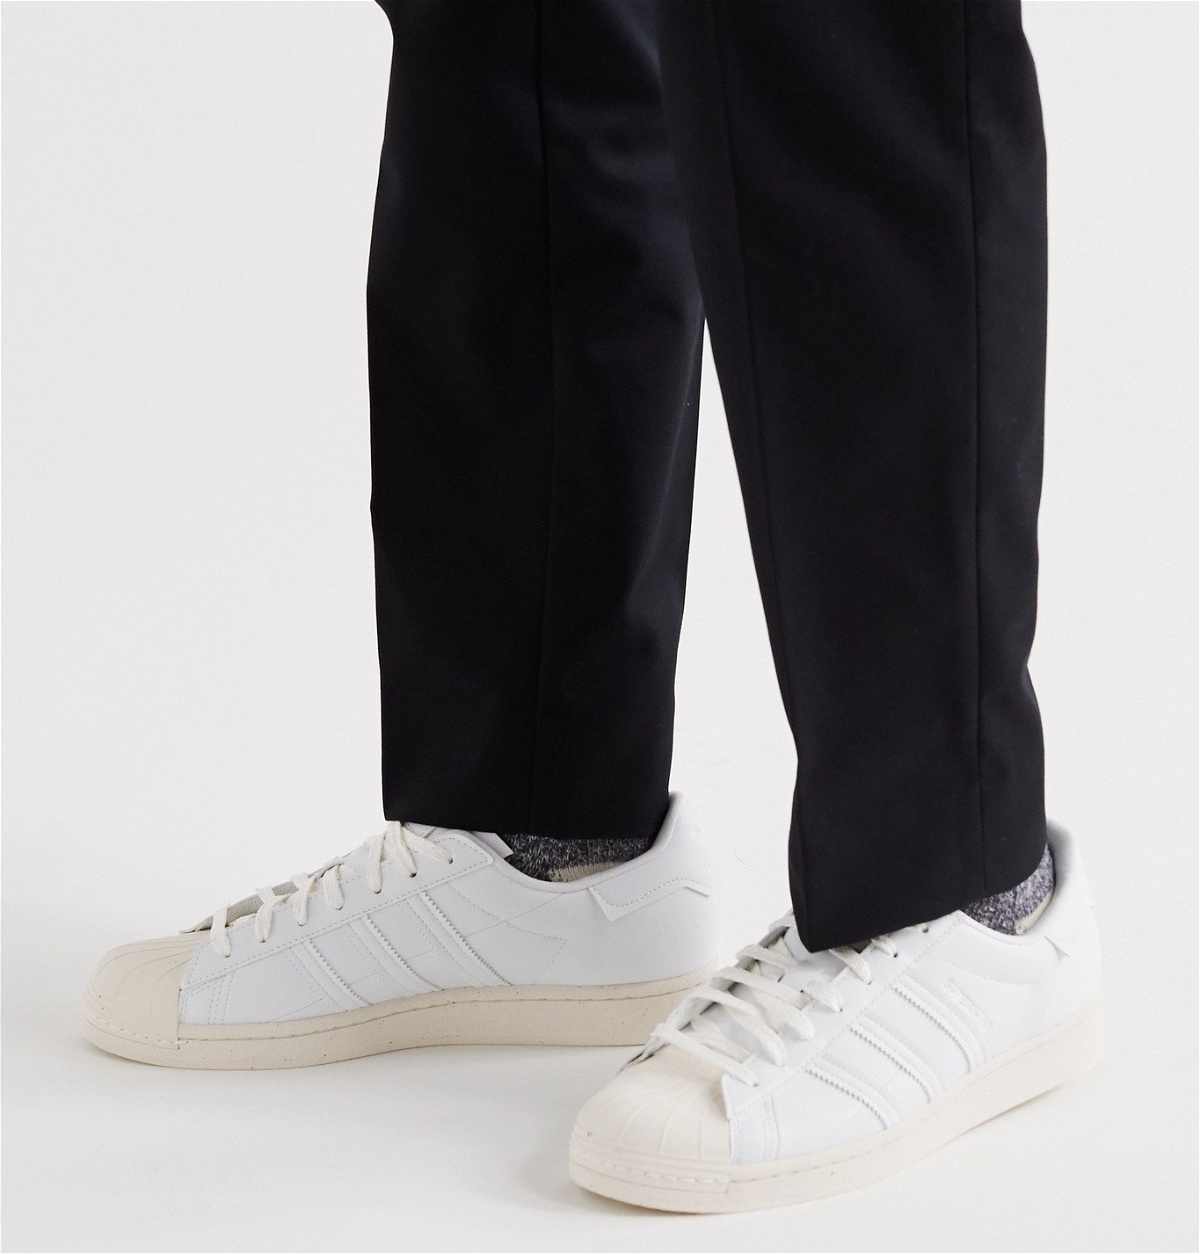 adidas Originals Wang Sneakers Leather Clean - Originals Vegan - adidas Alexander White by Classics Superstar